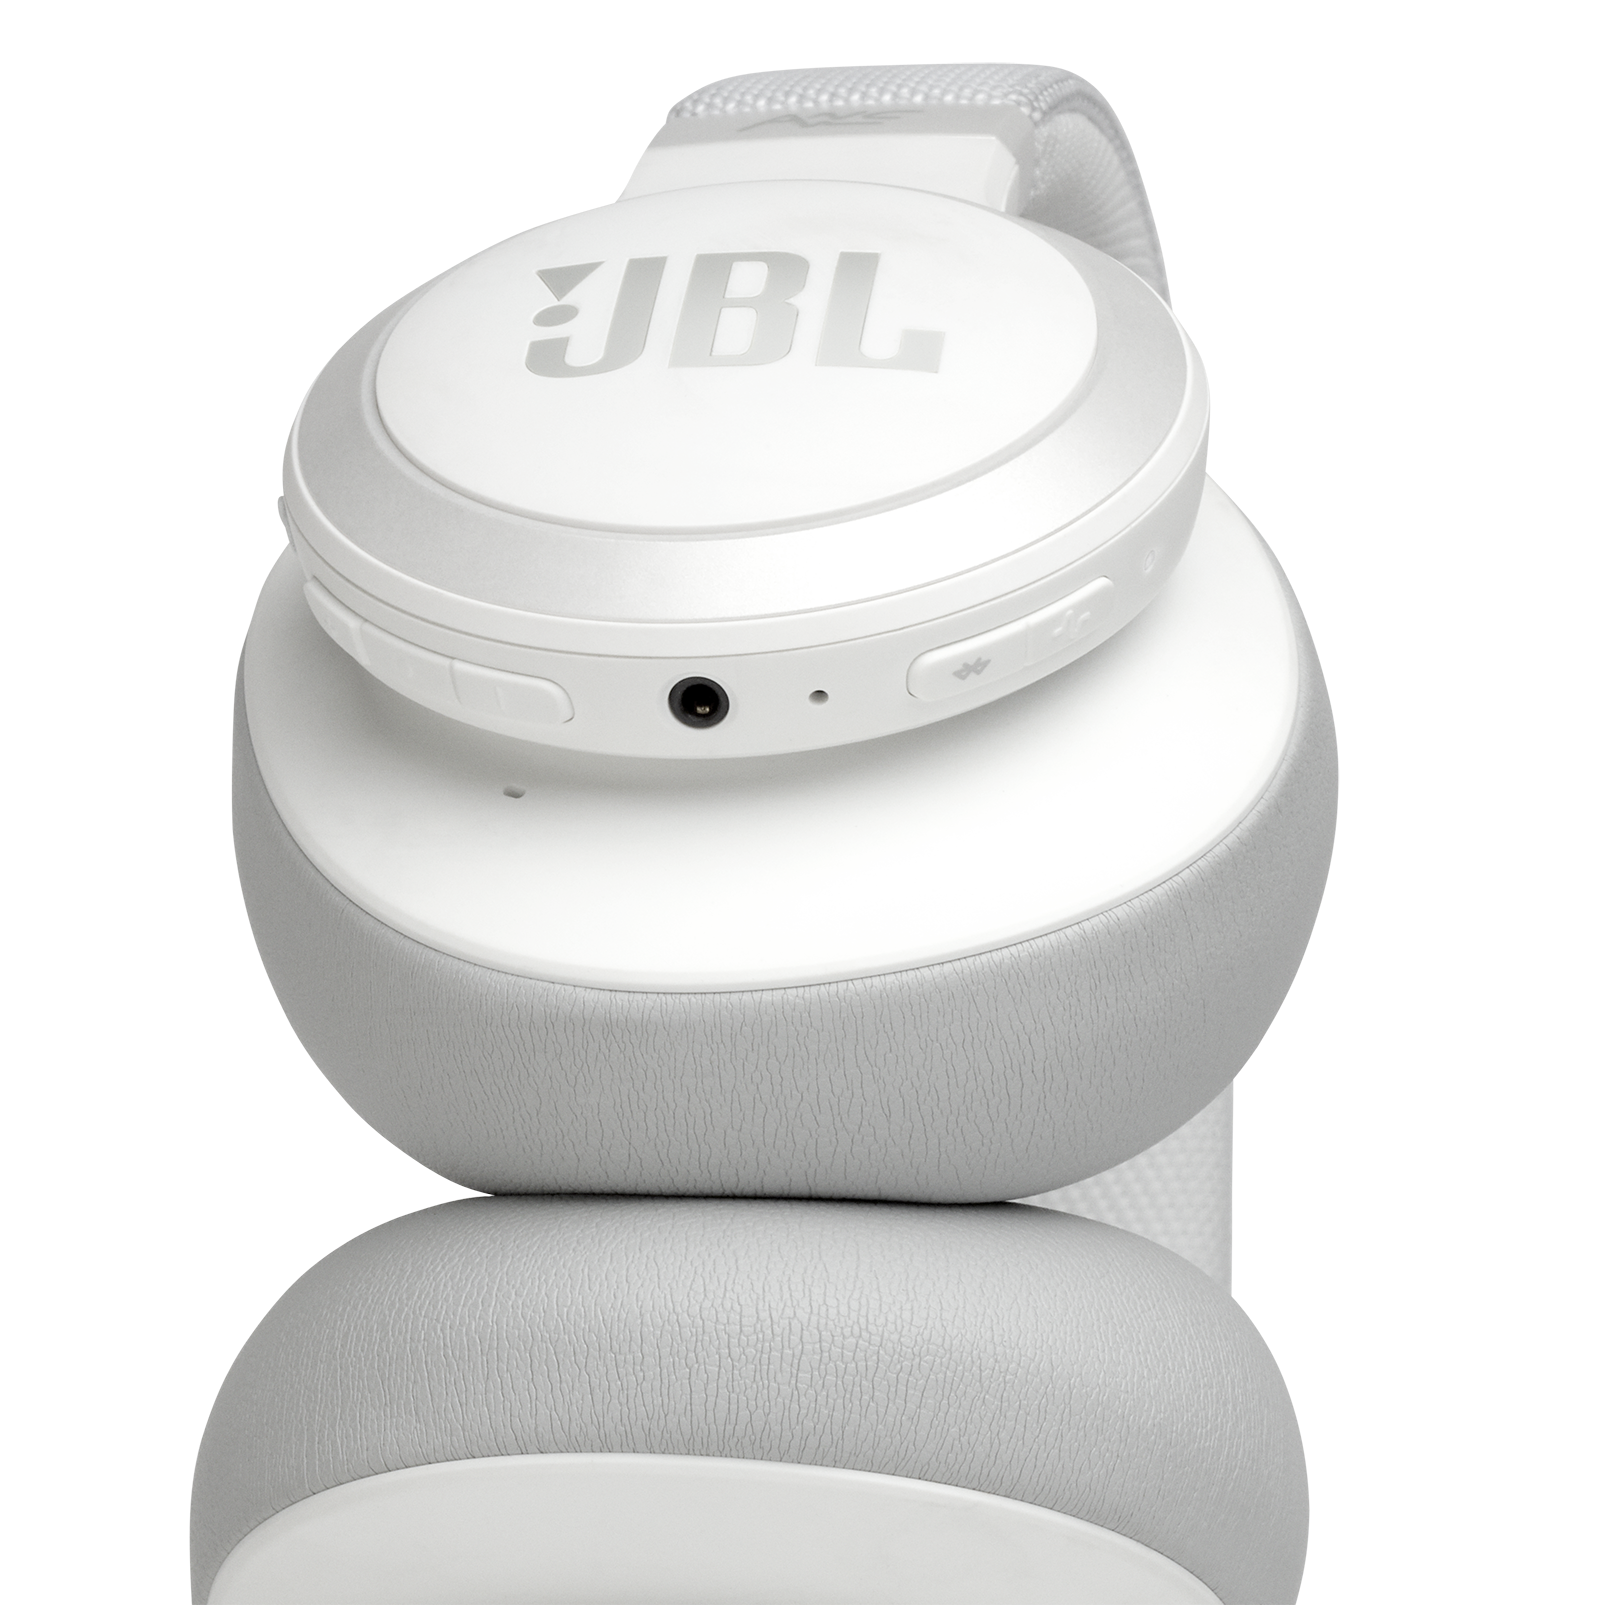 JBL Live 650BTNC - White - Wireless Over-Ear Noise-Cancelling Headphones - Detailshot 2